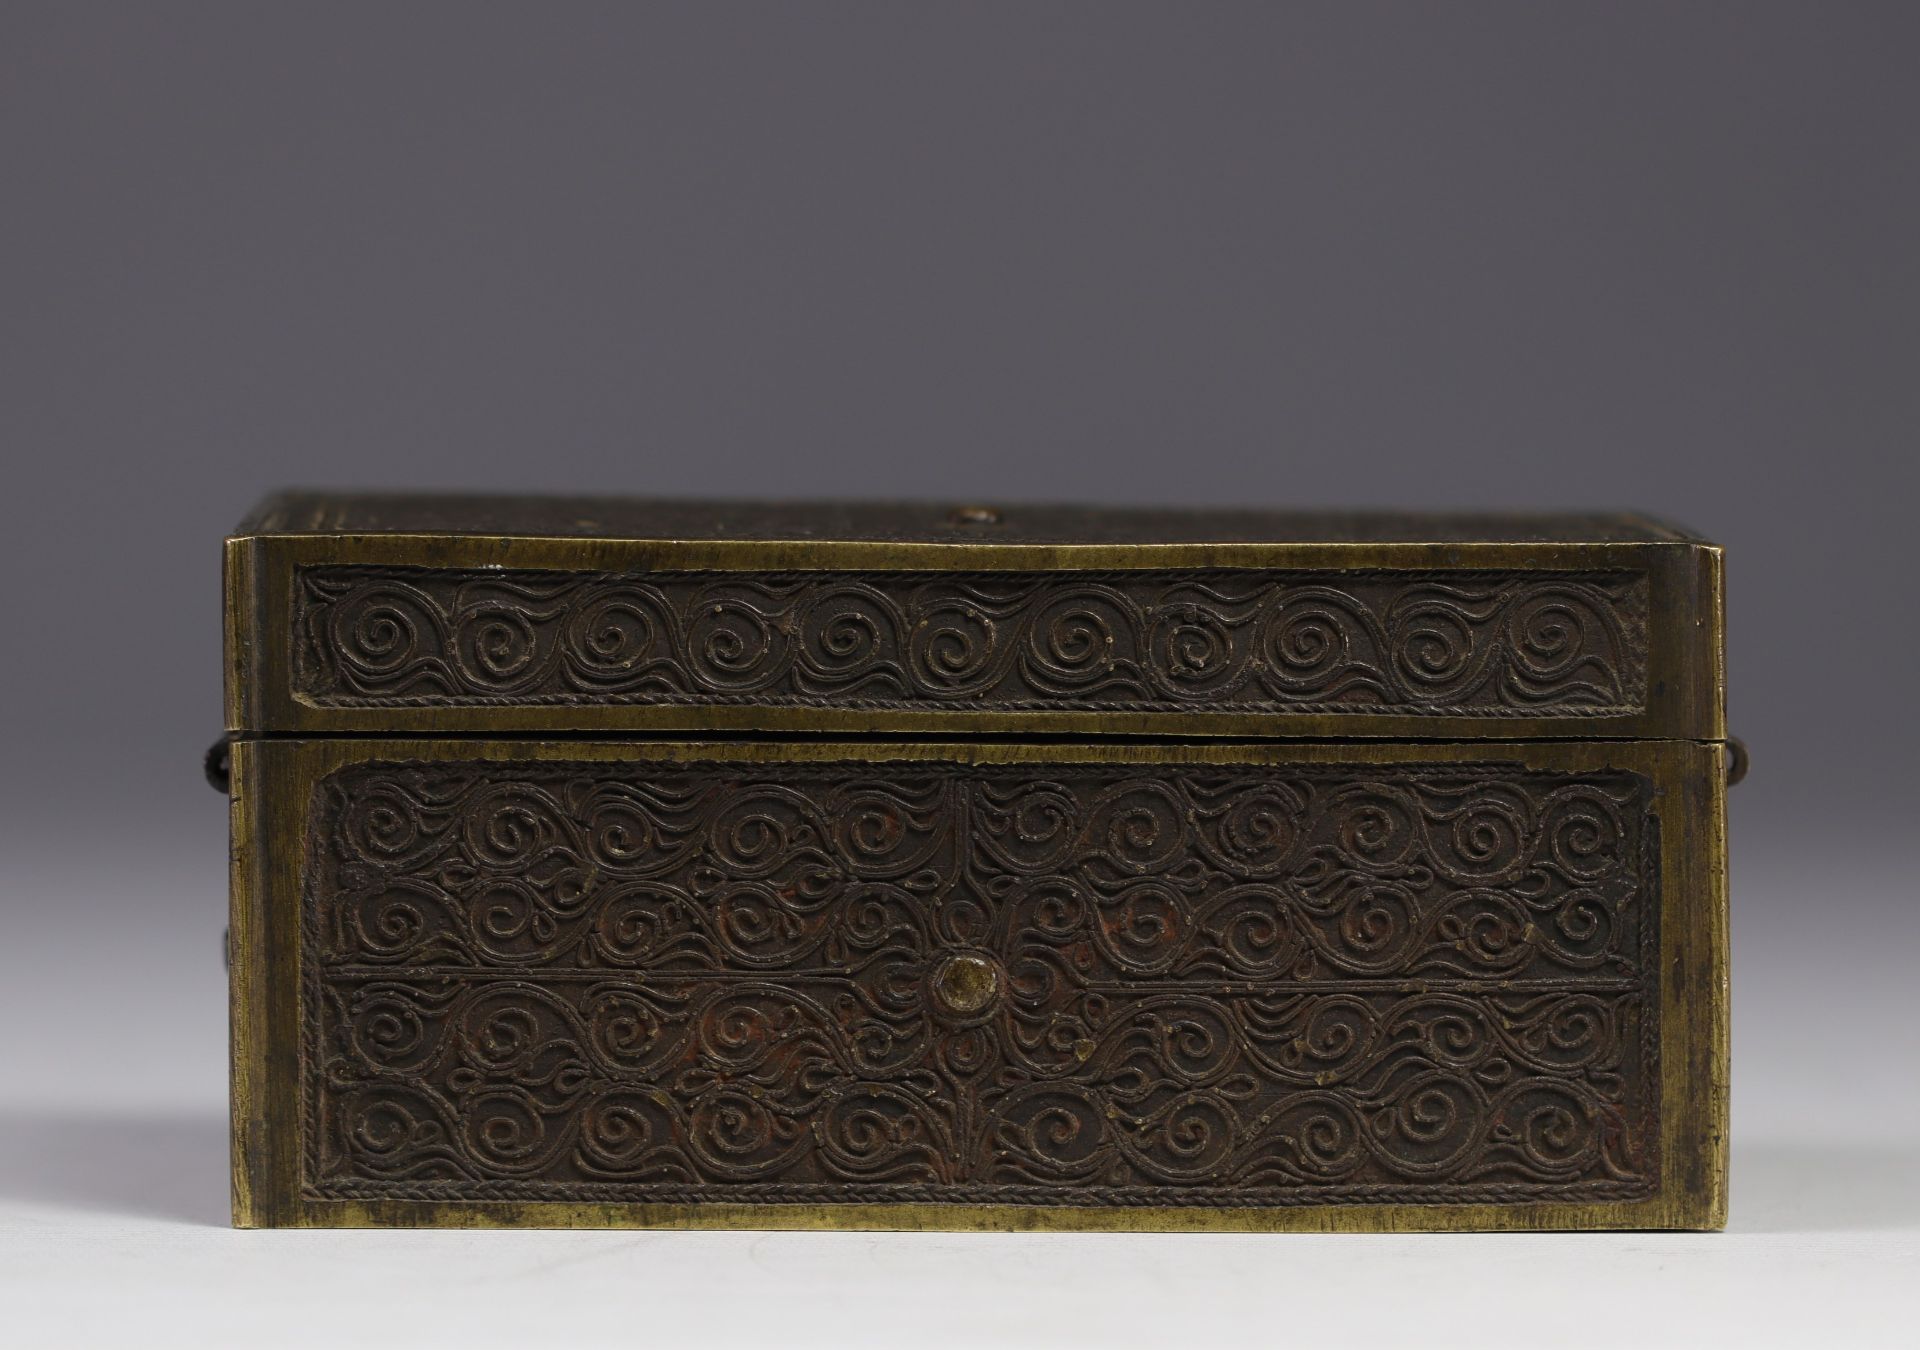 Persia / India - Bronze box decorated with spirals